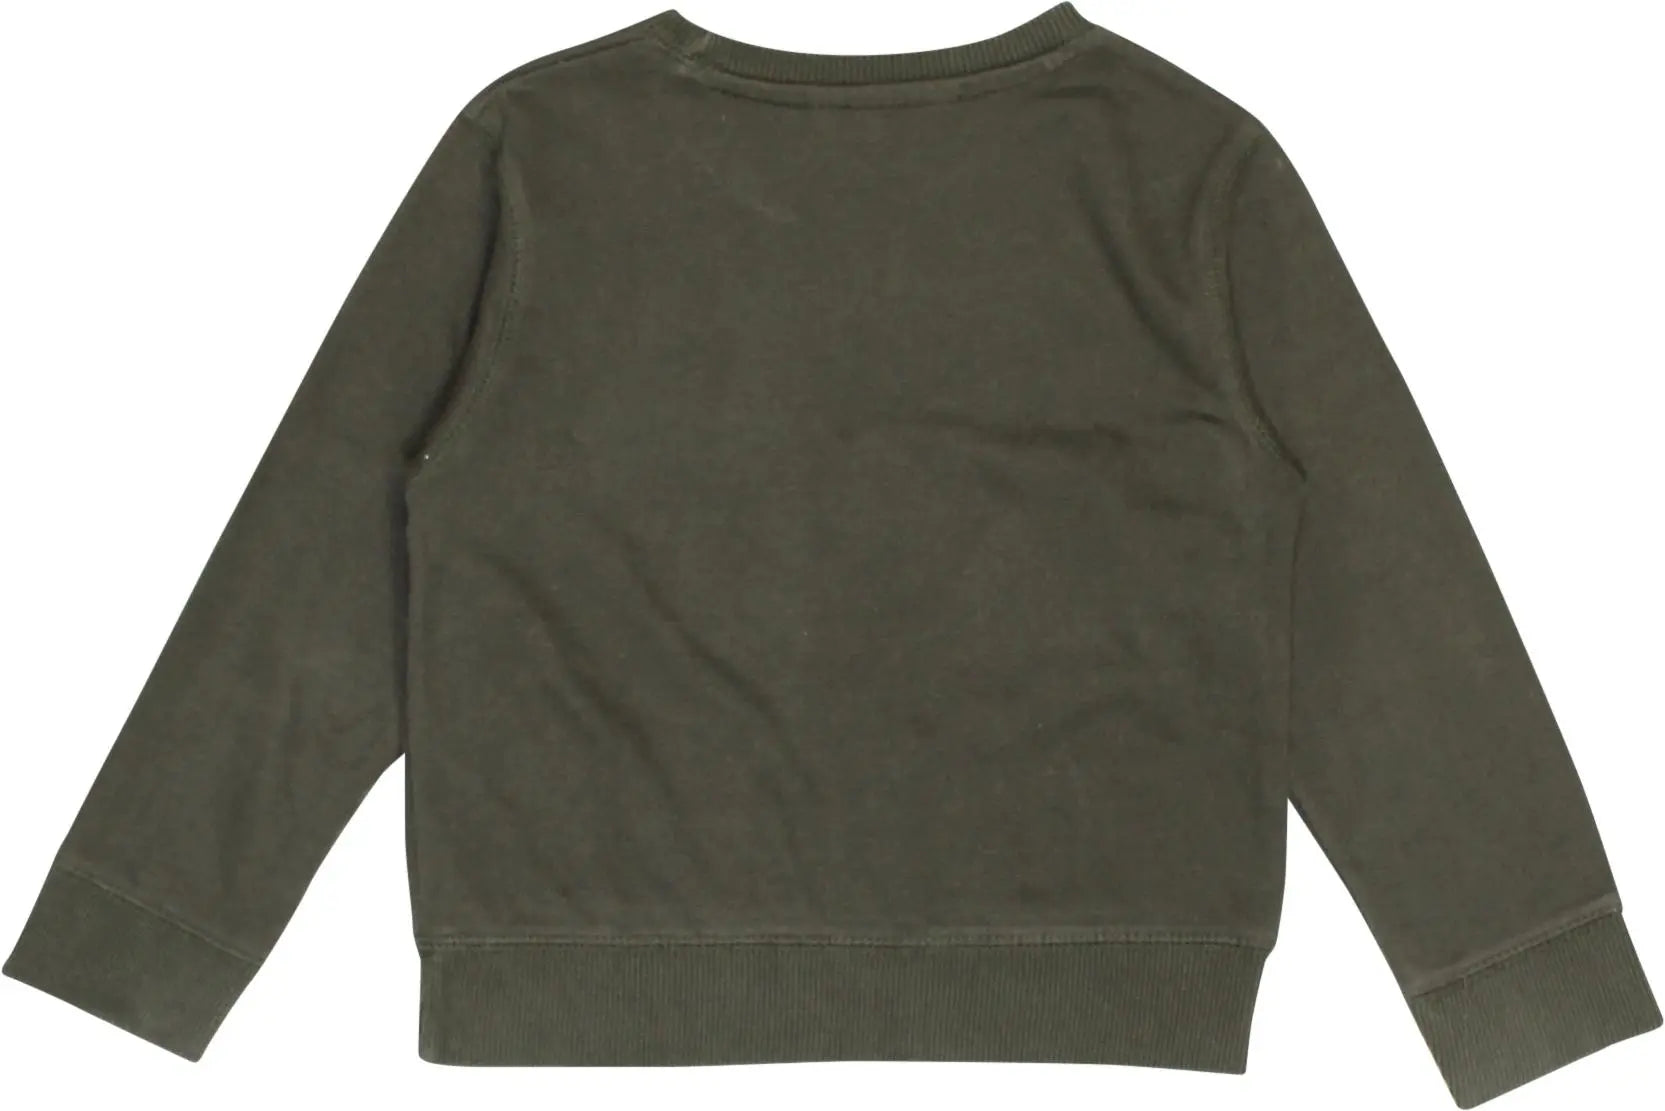 Mango - Green Sweatshirt- ThriftTale.com - Vintage and second handclothing